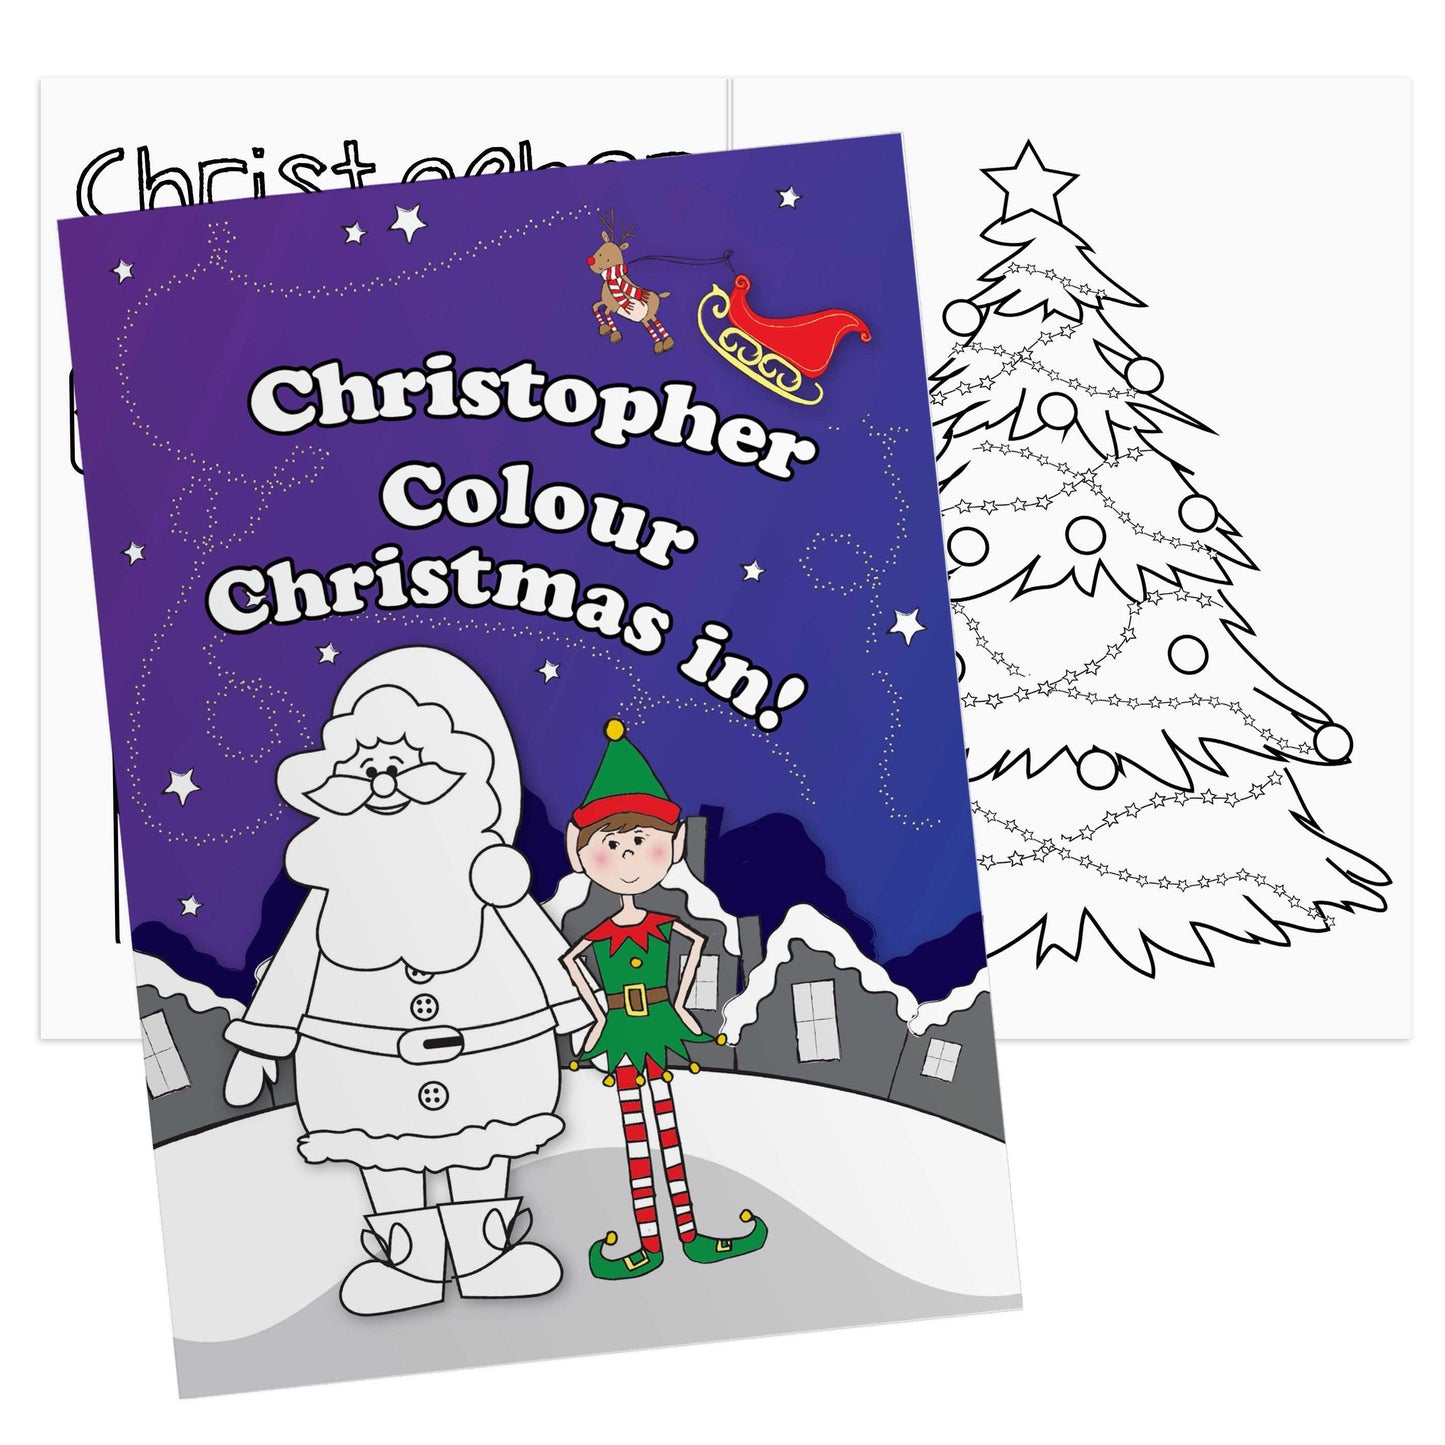 Christmas colouring book - Christmas colouring book by Sweetlea gifts